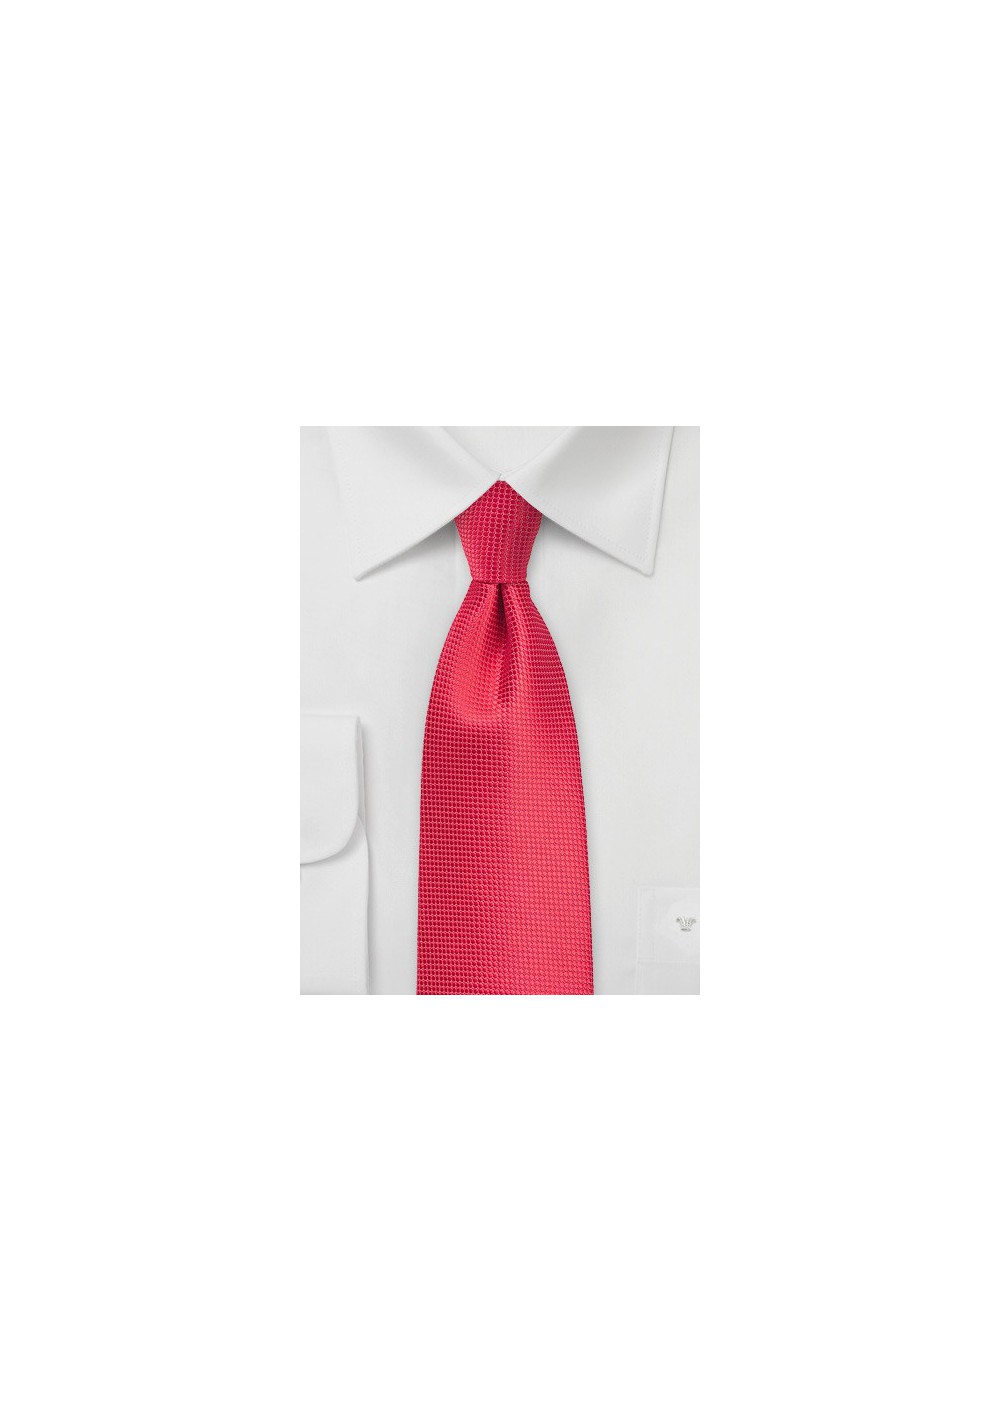 Grenadine Red Color Necktie